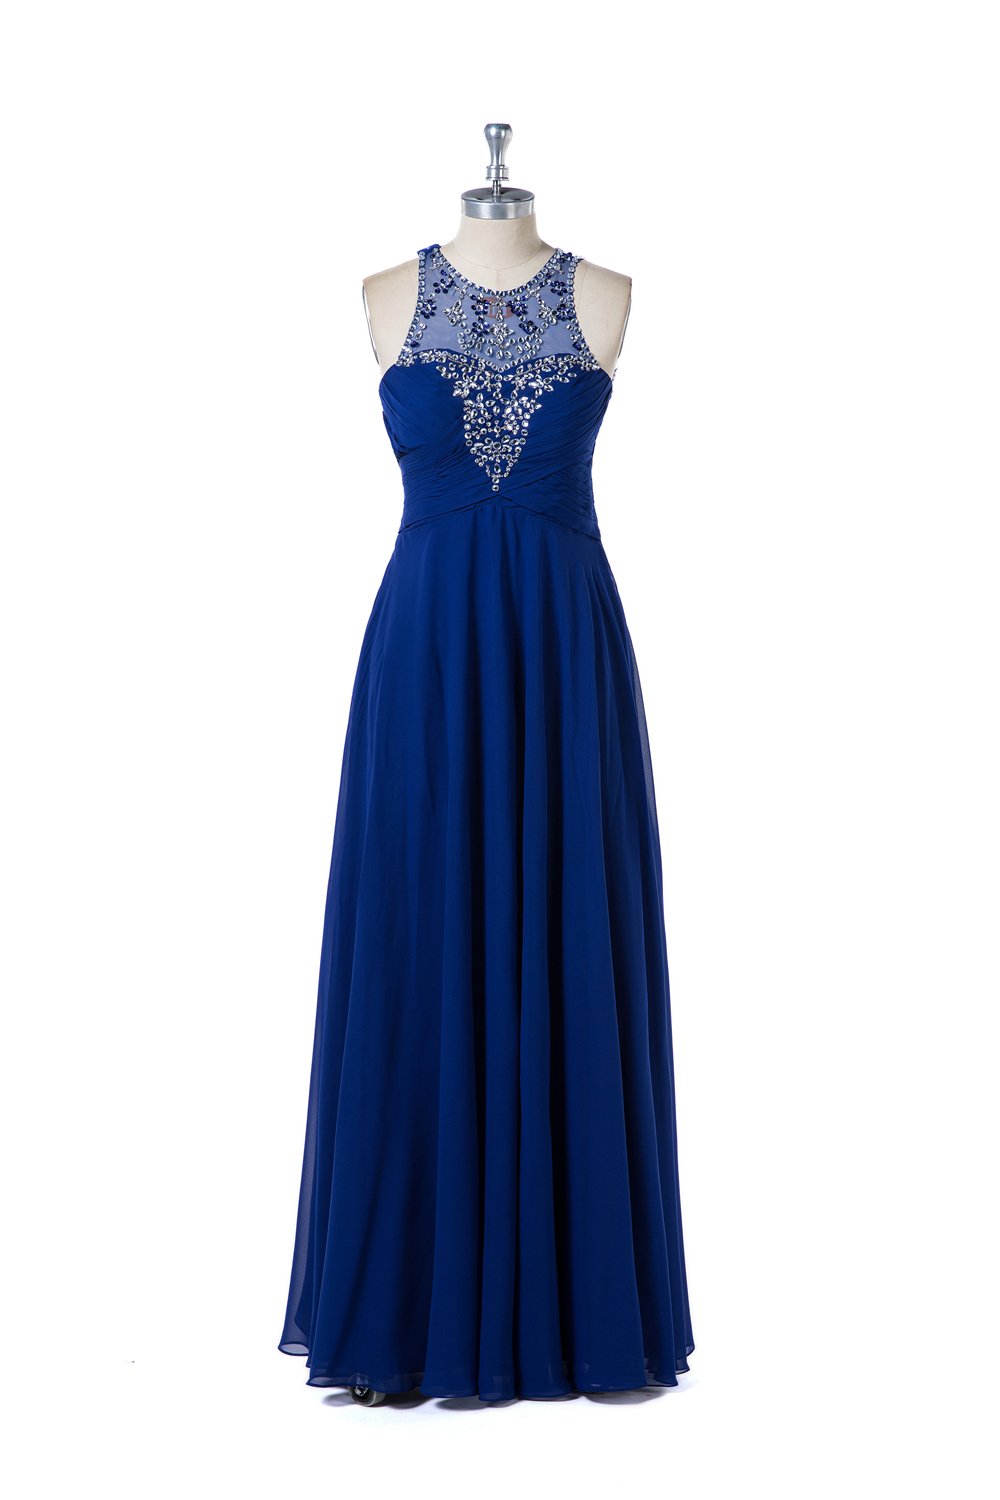 Chiffon Sleeveless Formal Dresses With Beads,pl5161